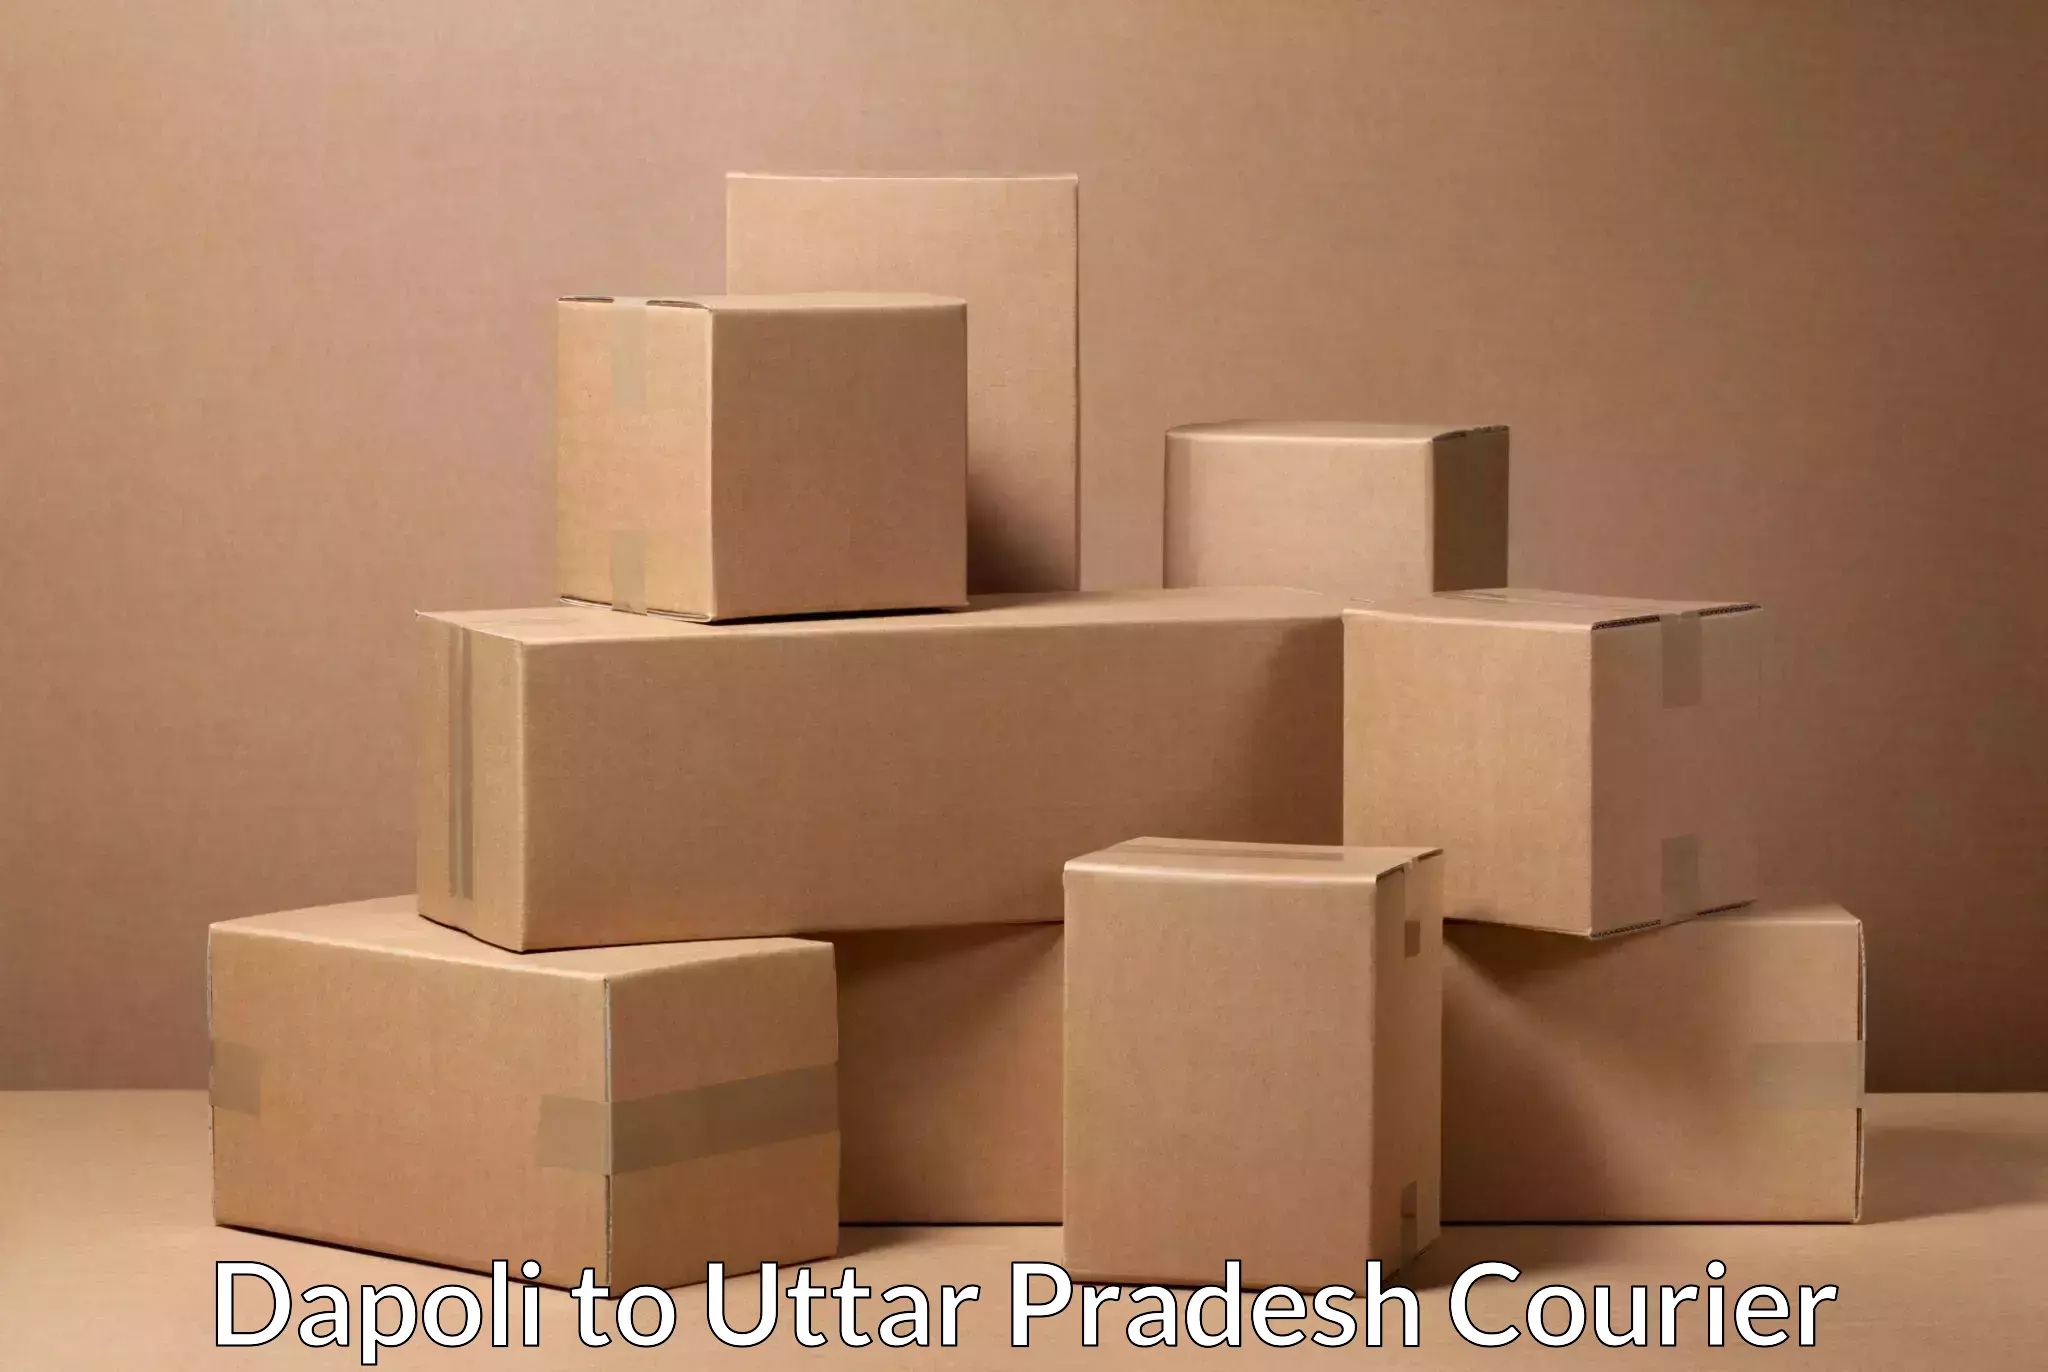 Efficient freight service Dapoli to Uttar Pradesh